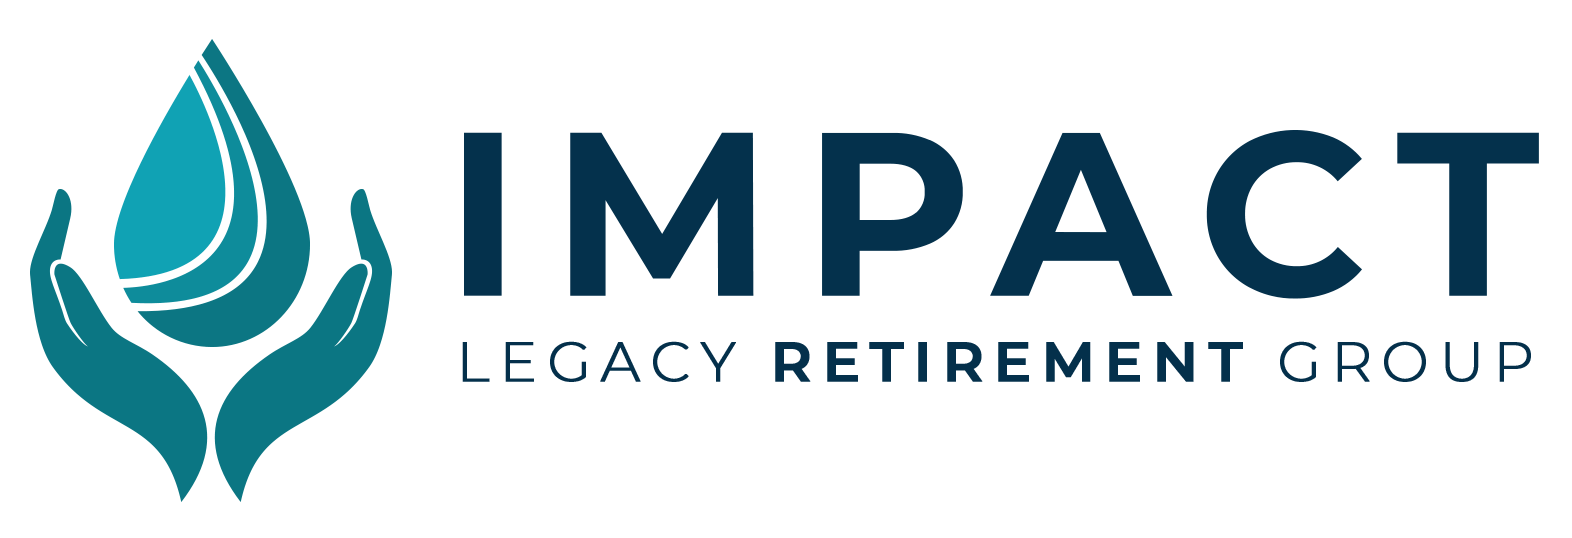 Impact Legacy Retirement Group Horizontal Logo copy